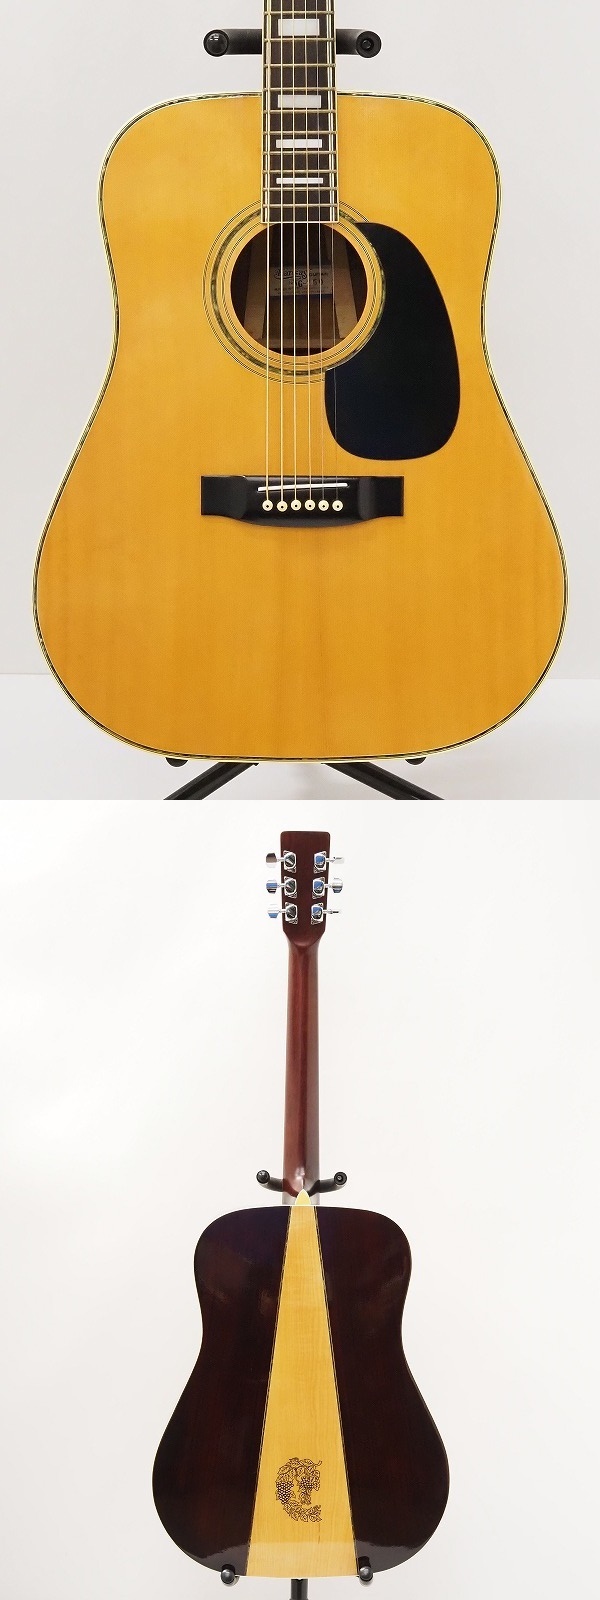 Kansas WG-250 アコースティックギター 鈴木 カンサス キワヤ